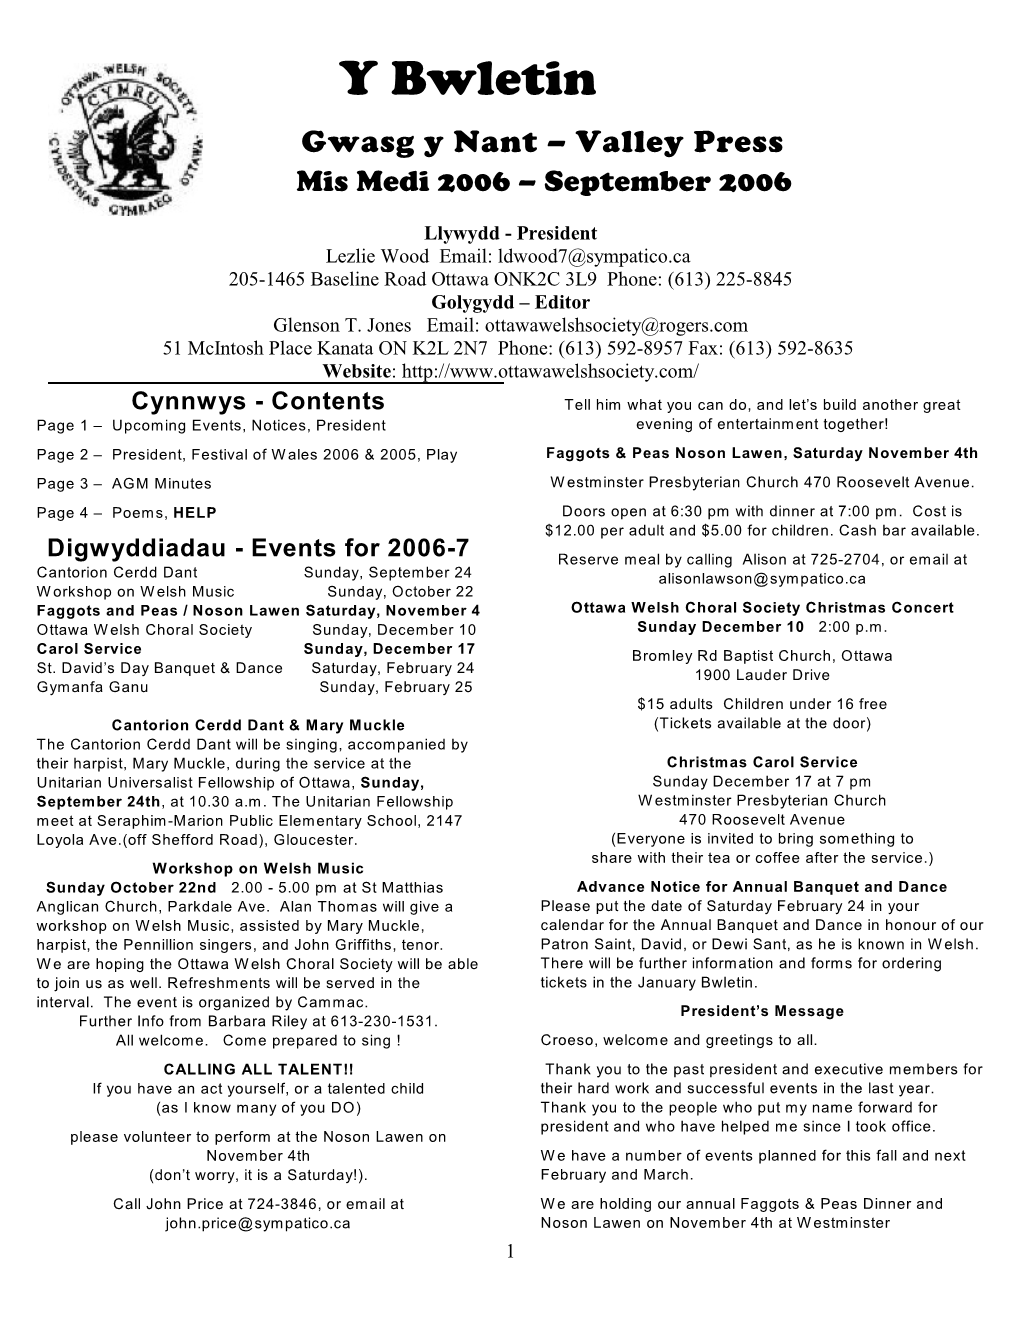 Y Bwletin Gwasg Y Nant – Valley Press Mis Medi 2006 – September 2006